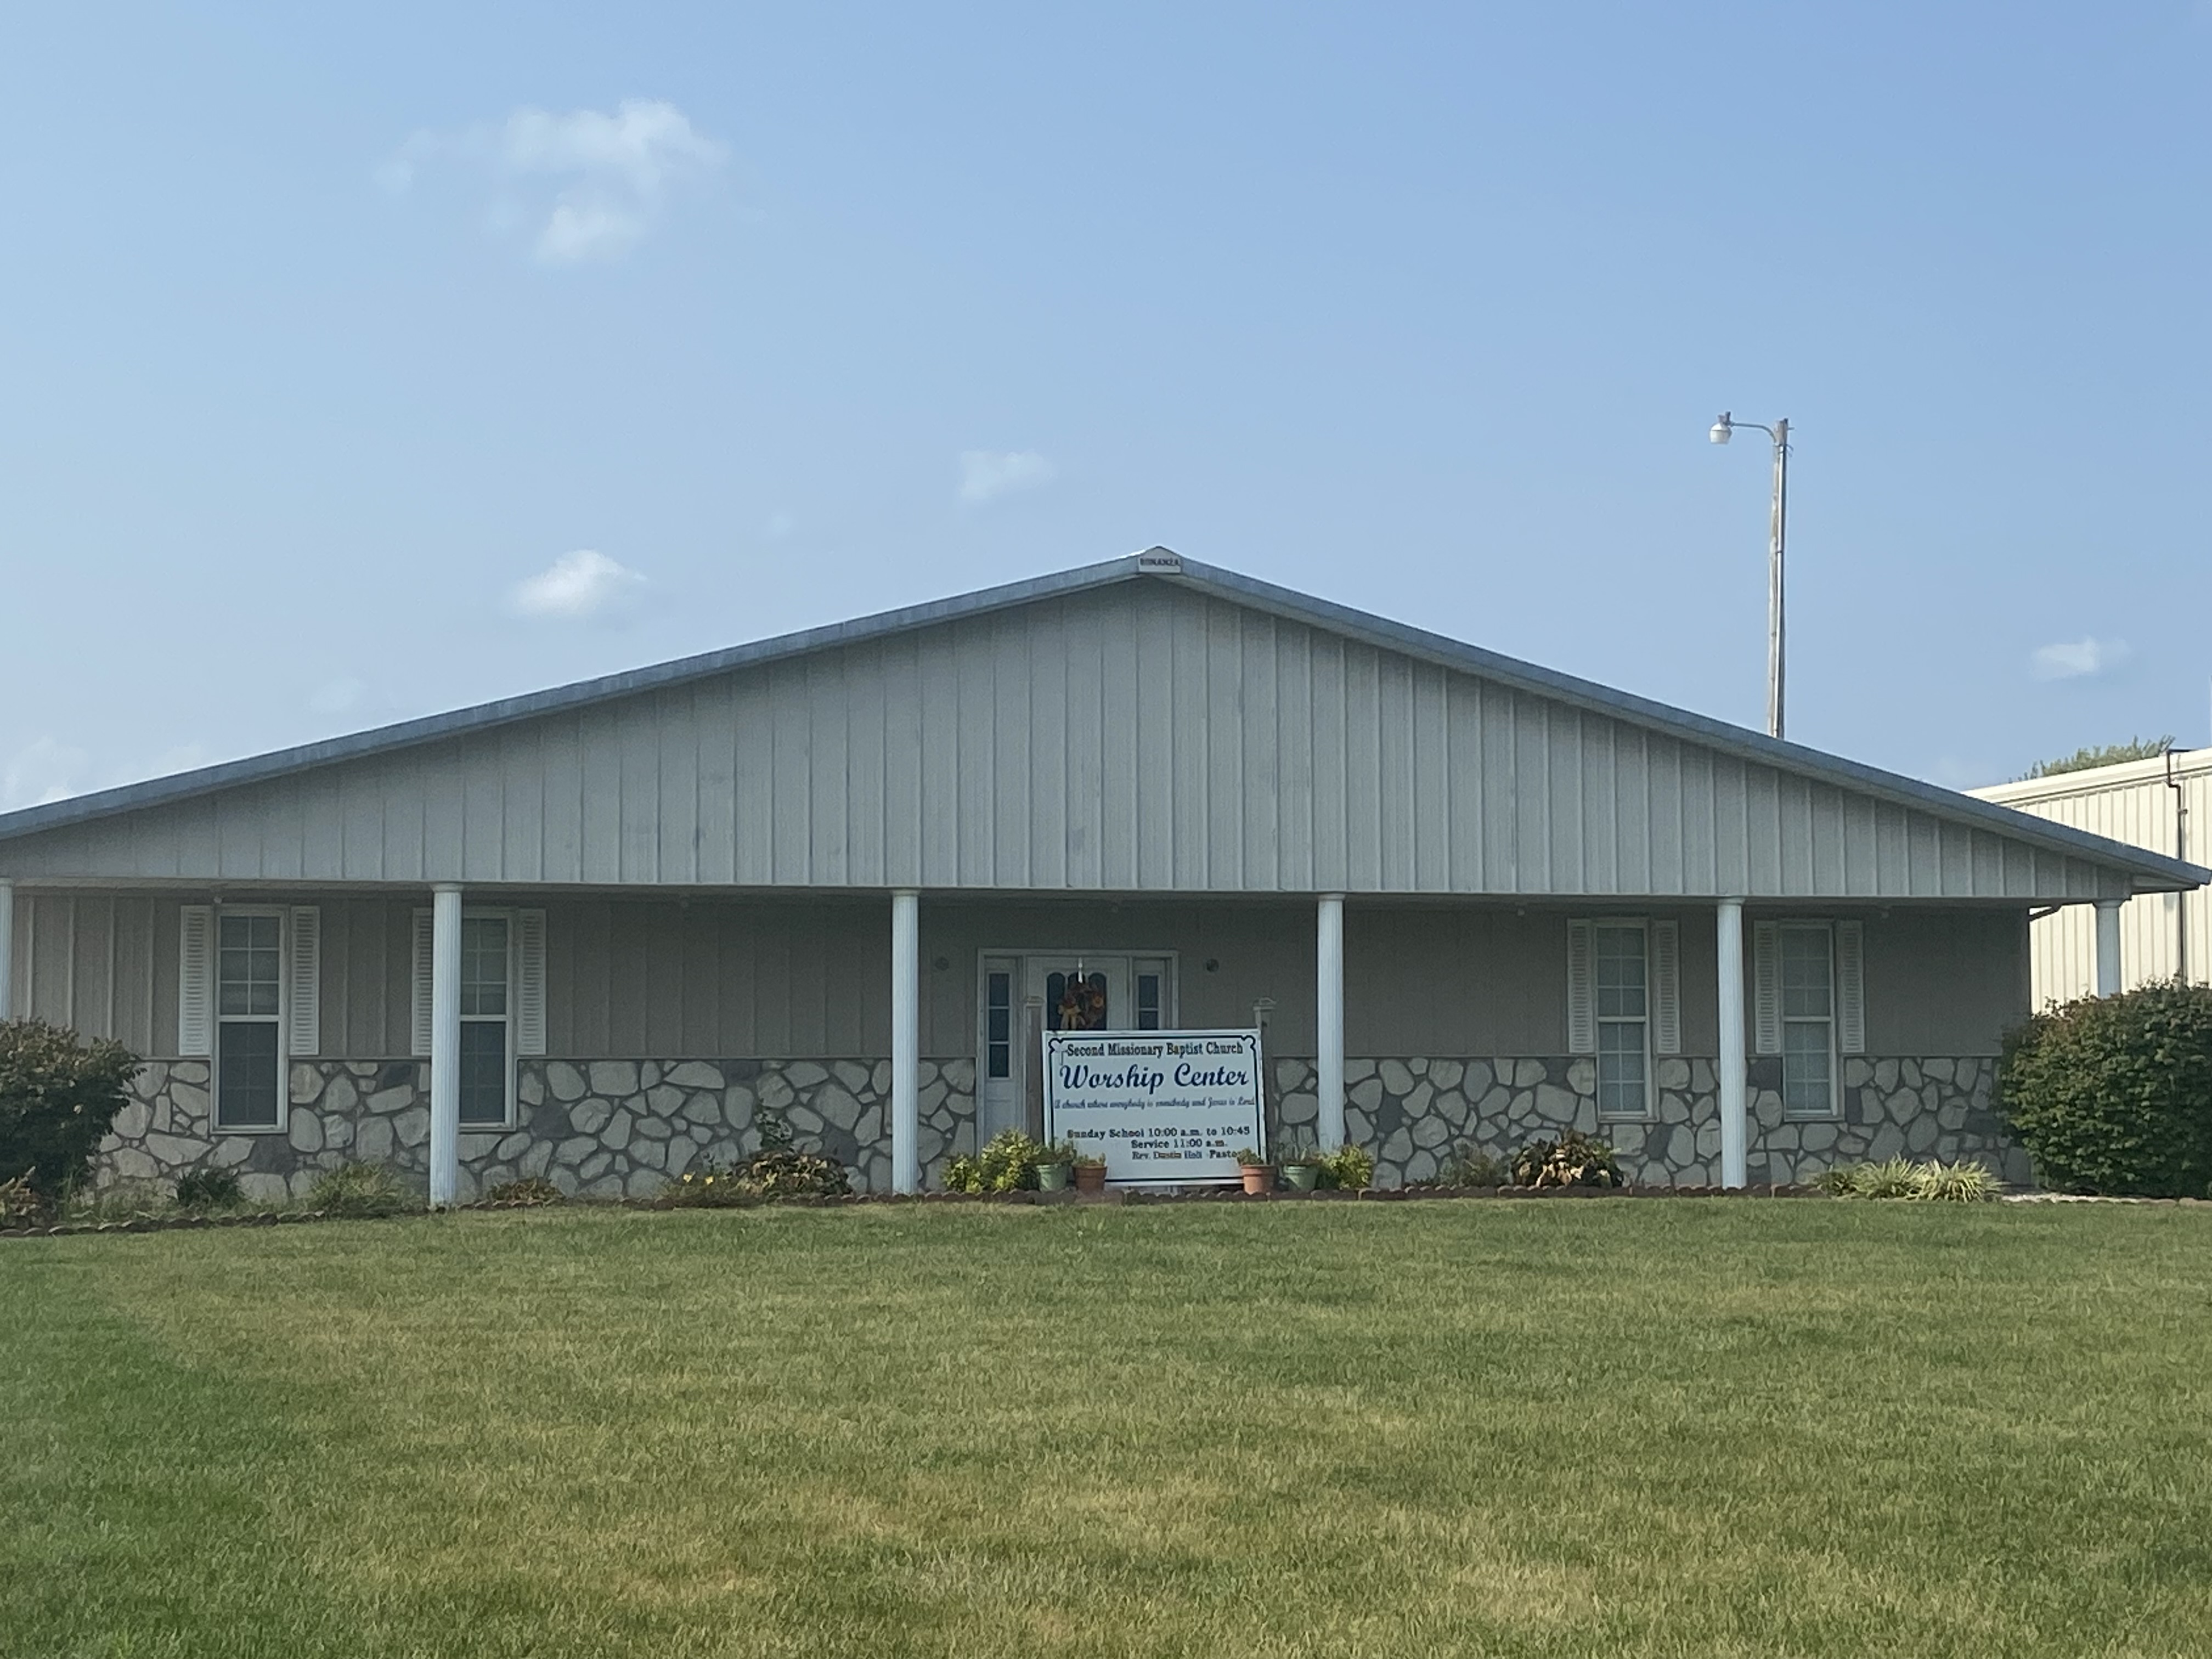 Second Missionary Baptist Church